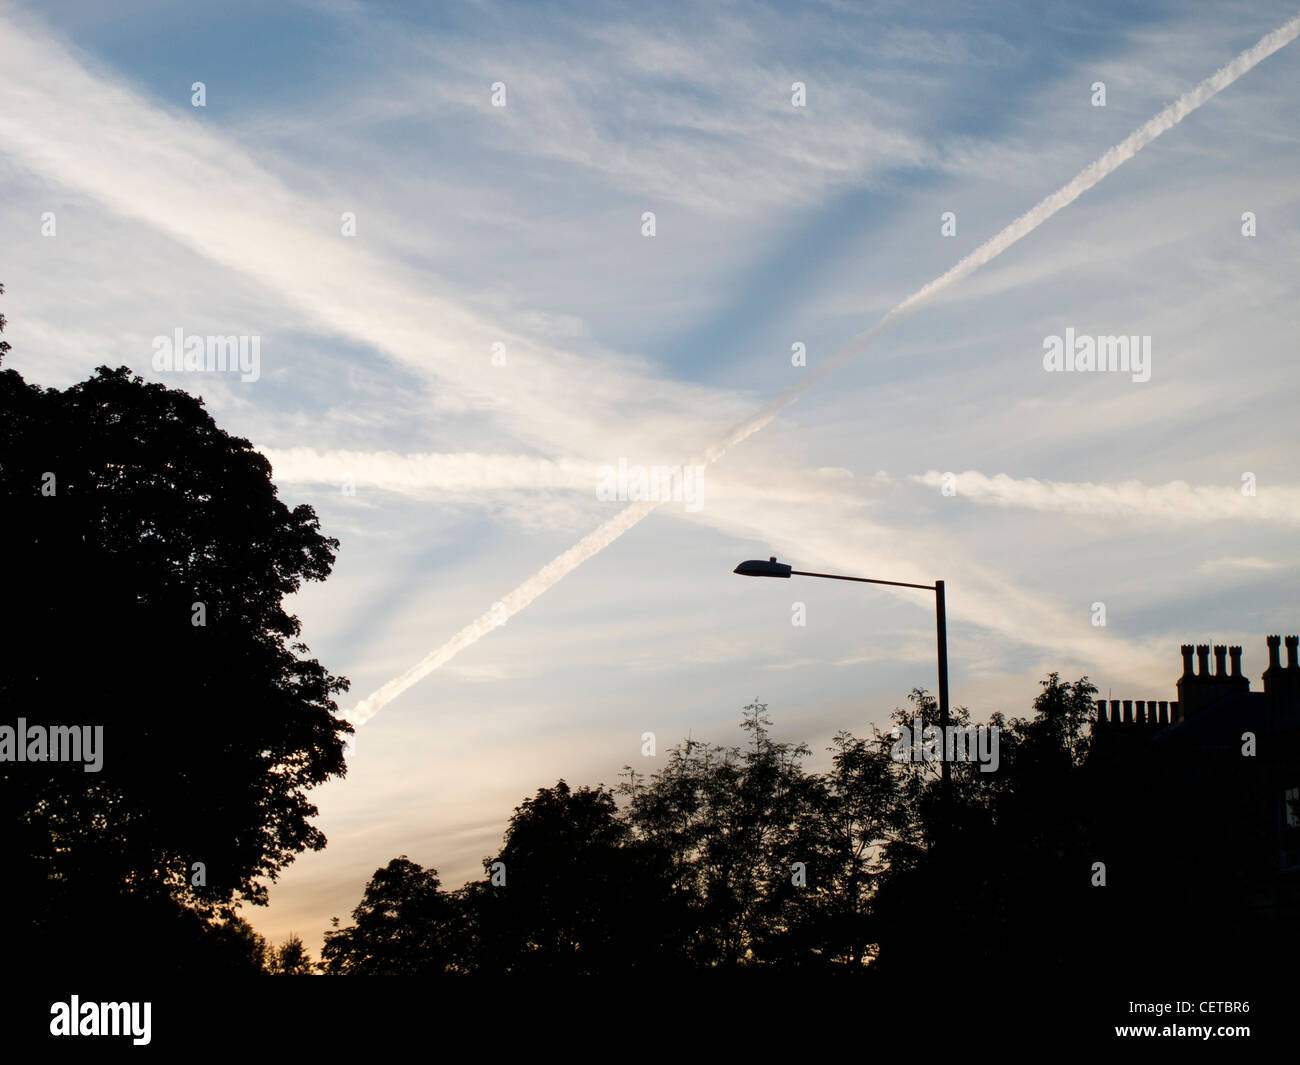 X vapore sagomata sentieri nel cielo, serata Foto stock - Alamy